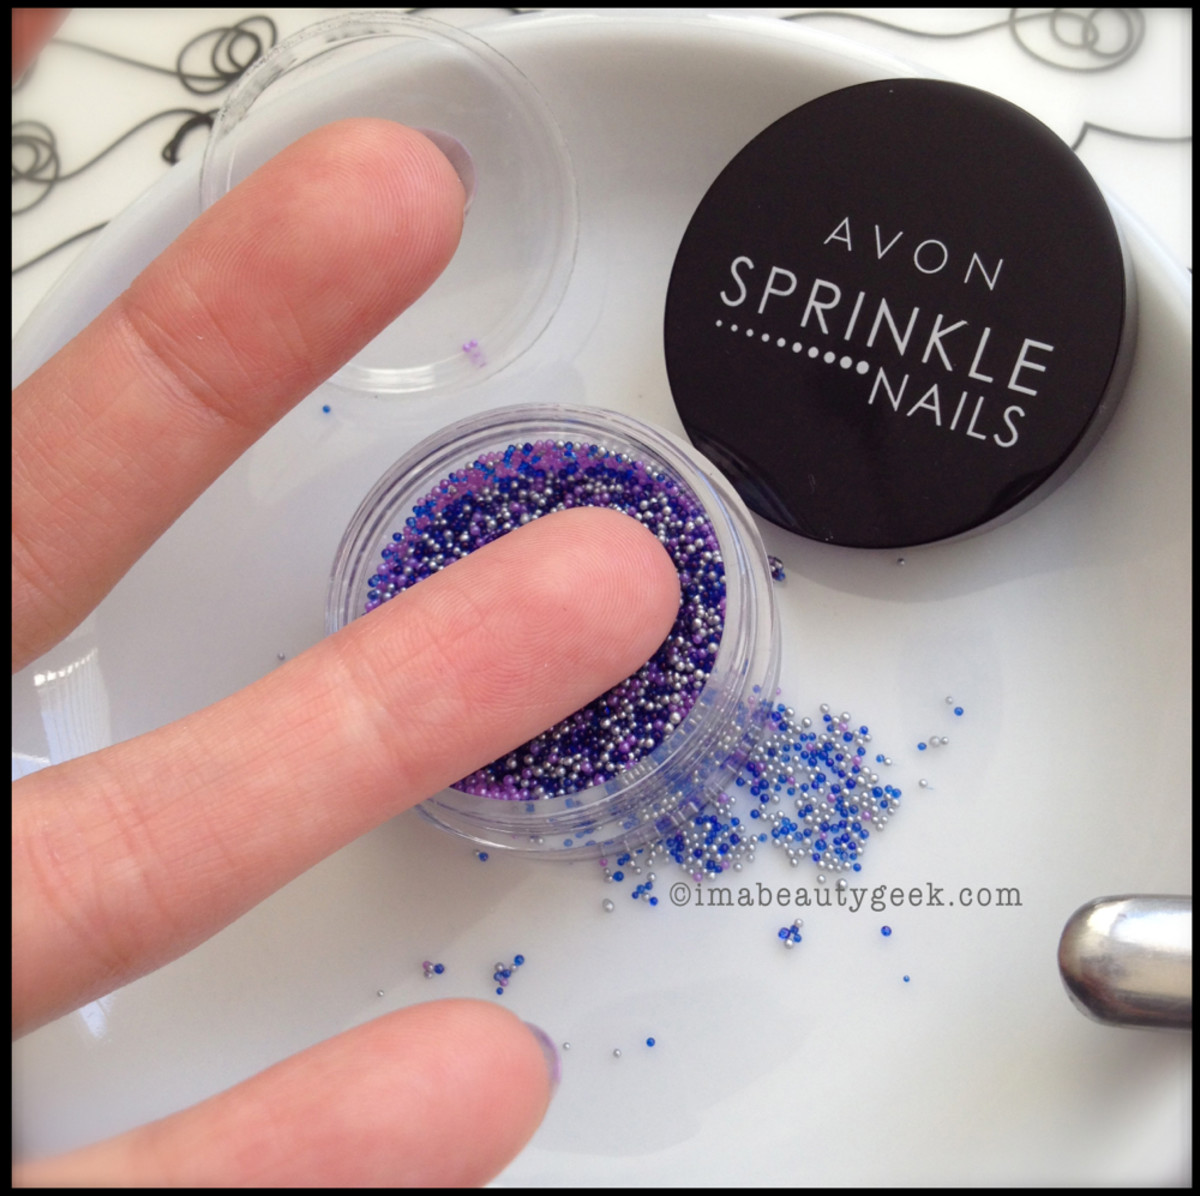 Avon Sprinkle Nails_3